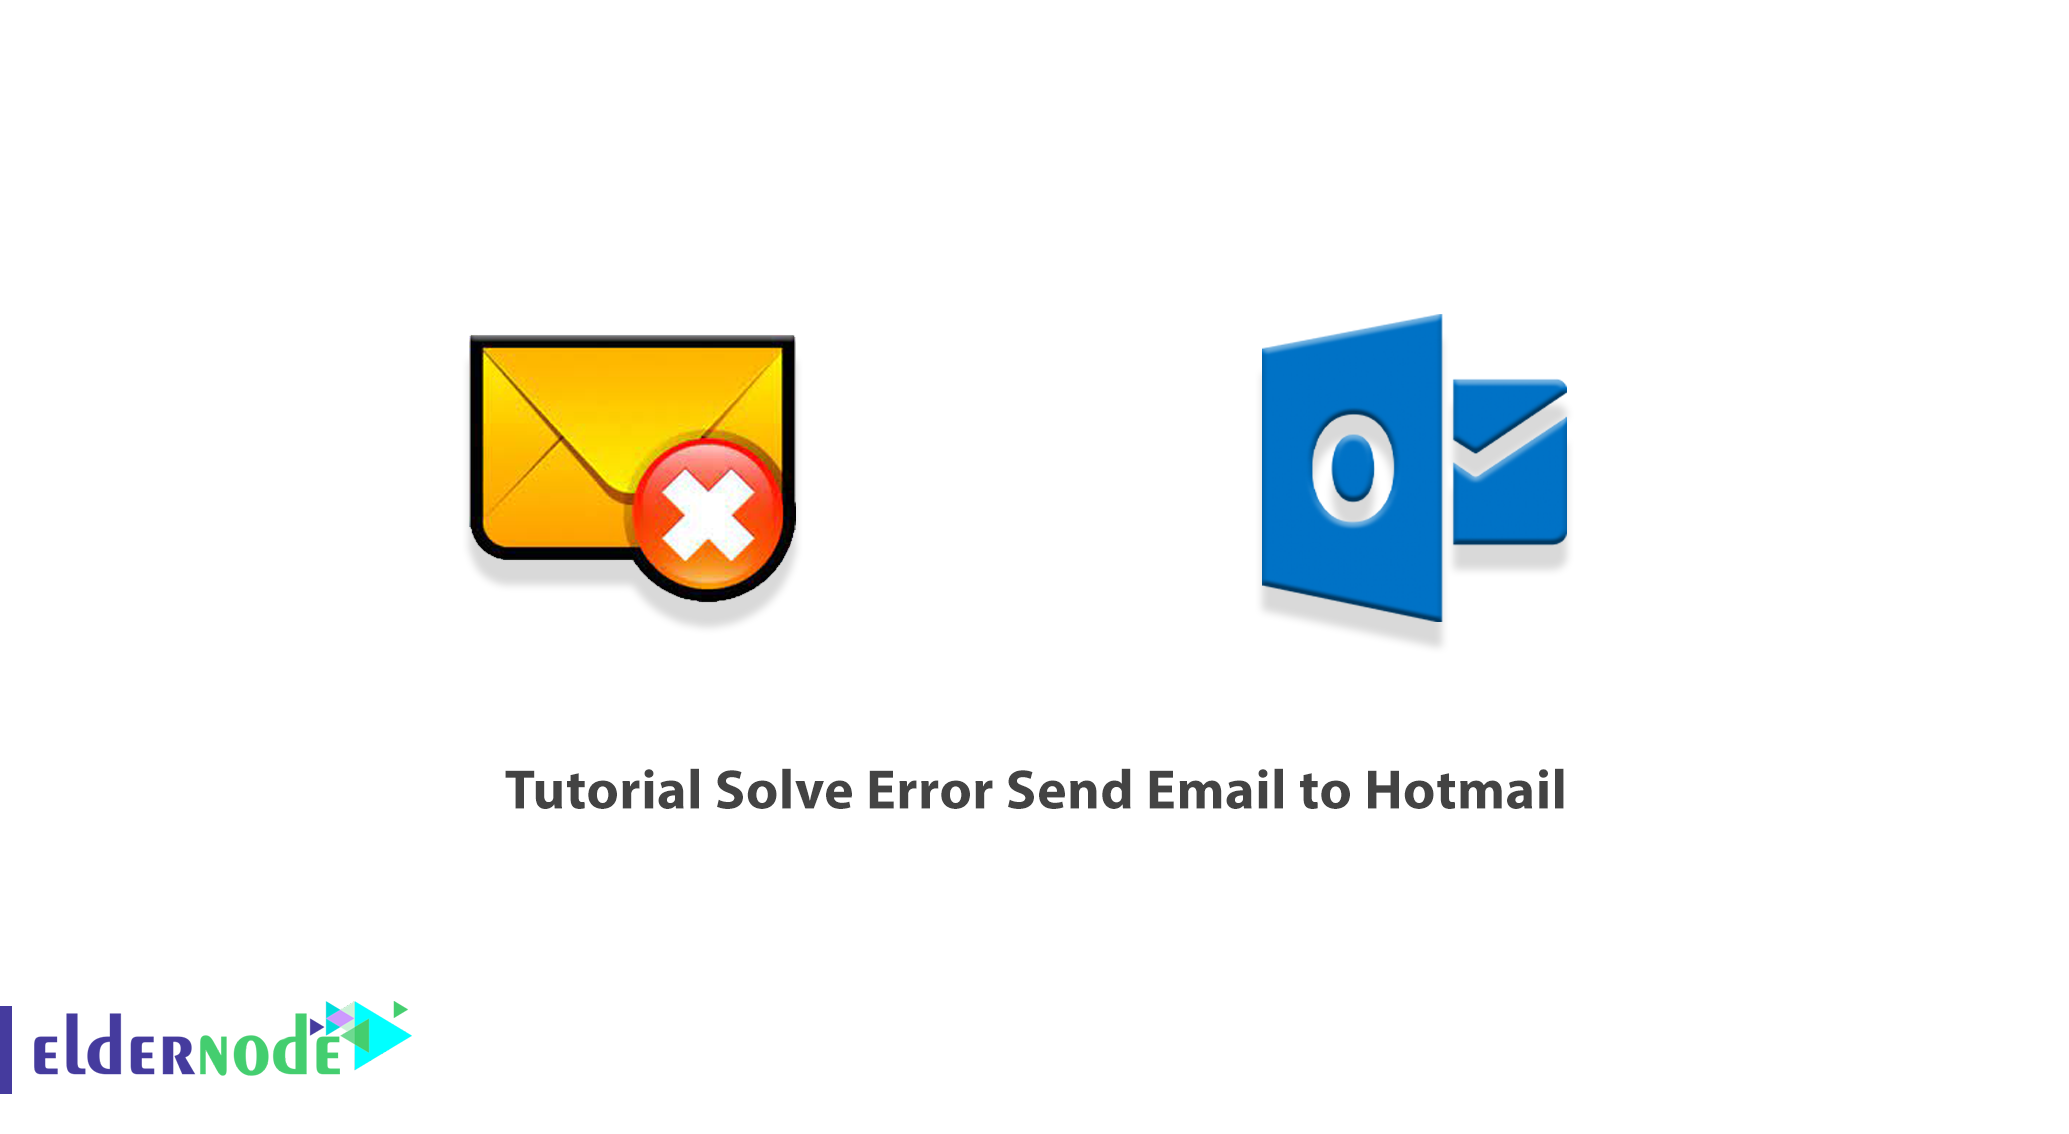 Tutorial Solve Error Send Email to Hotmail Eldernode Blog